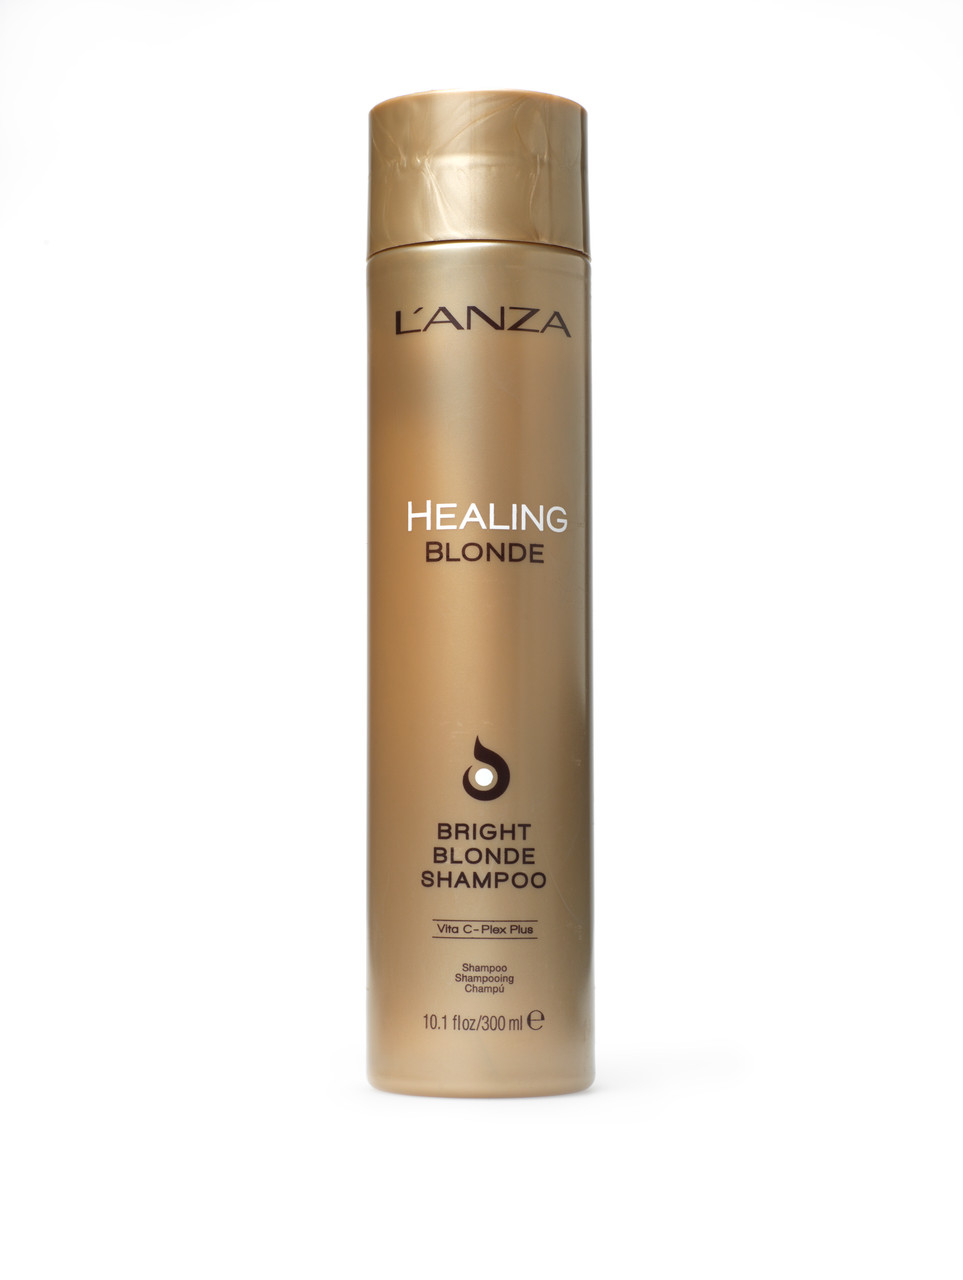 L'ANZA Healing Blonde Bright Blonde Shampoo 10.1 oz - BeautyBox Direct